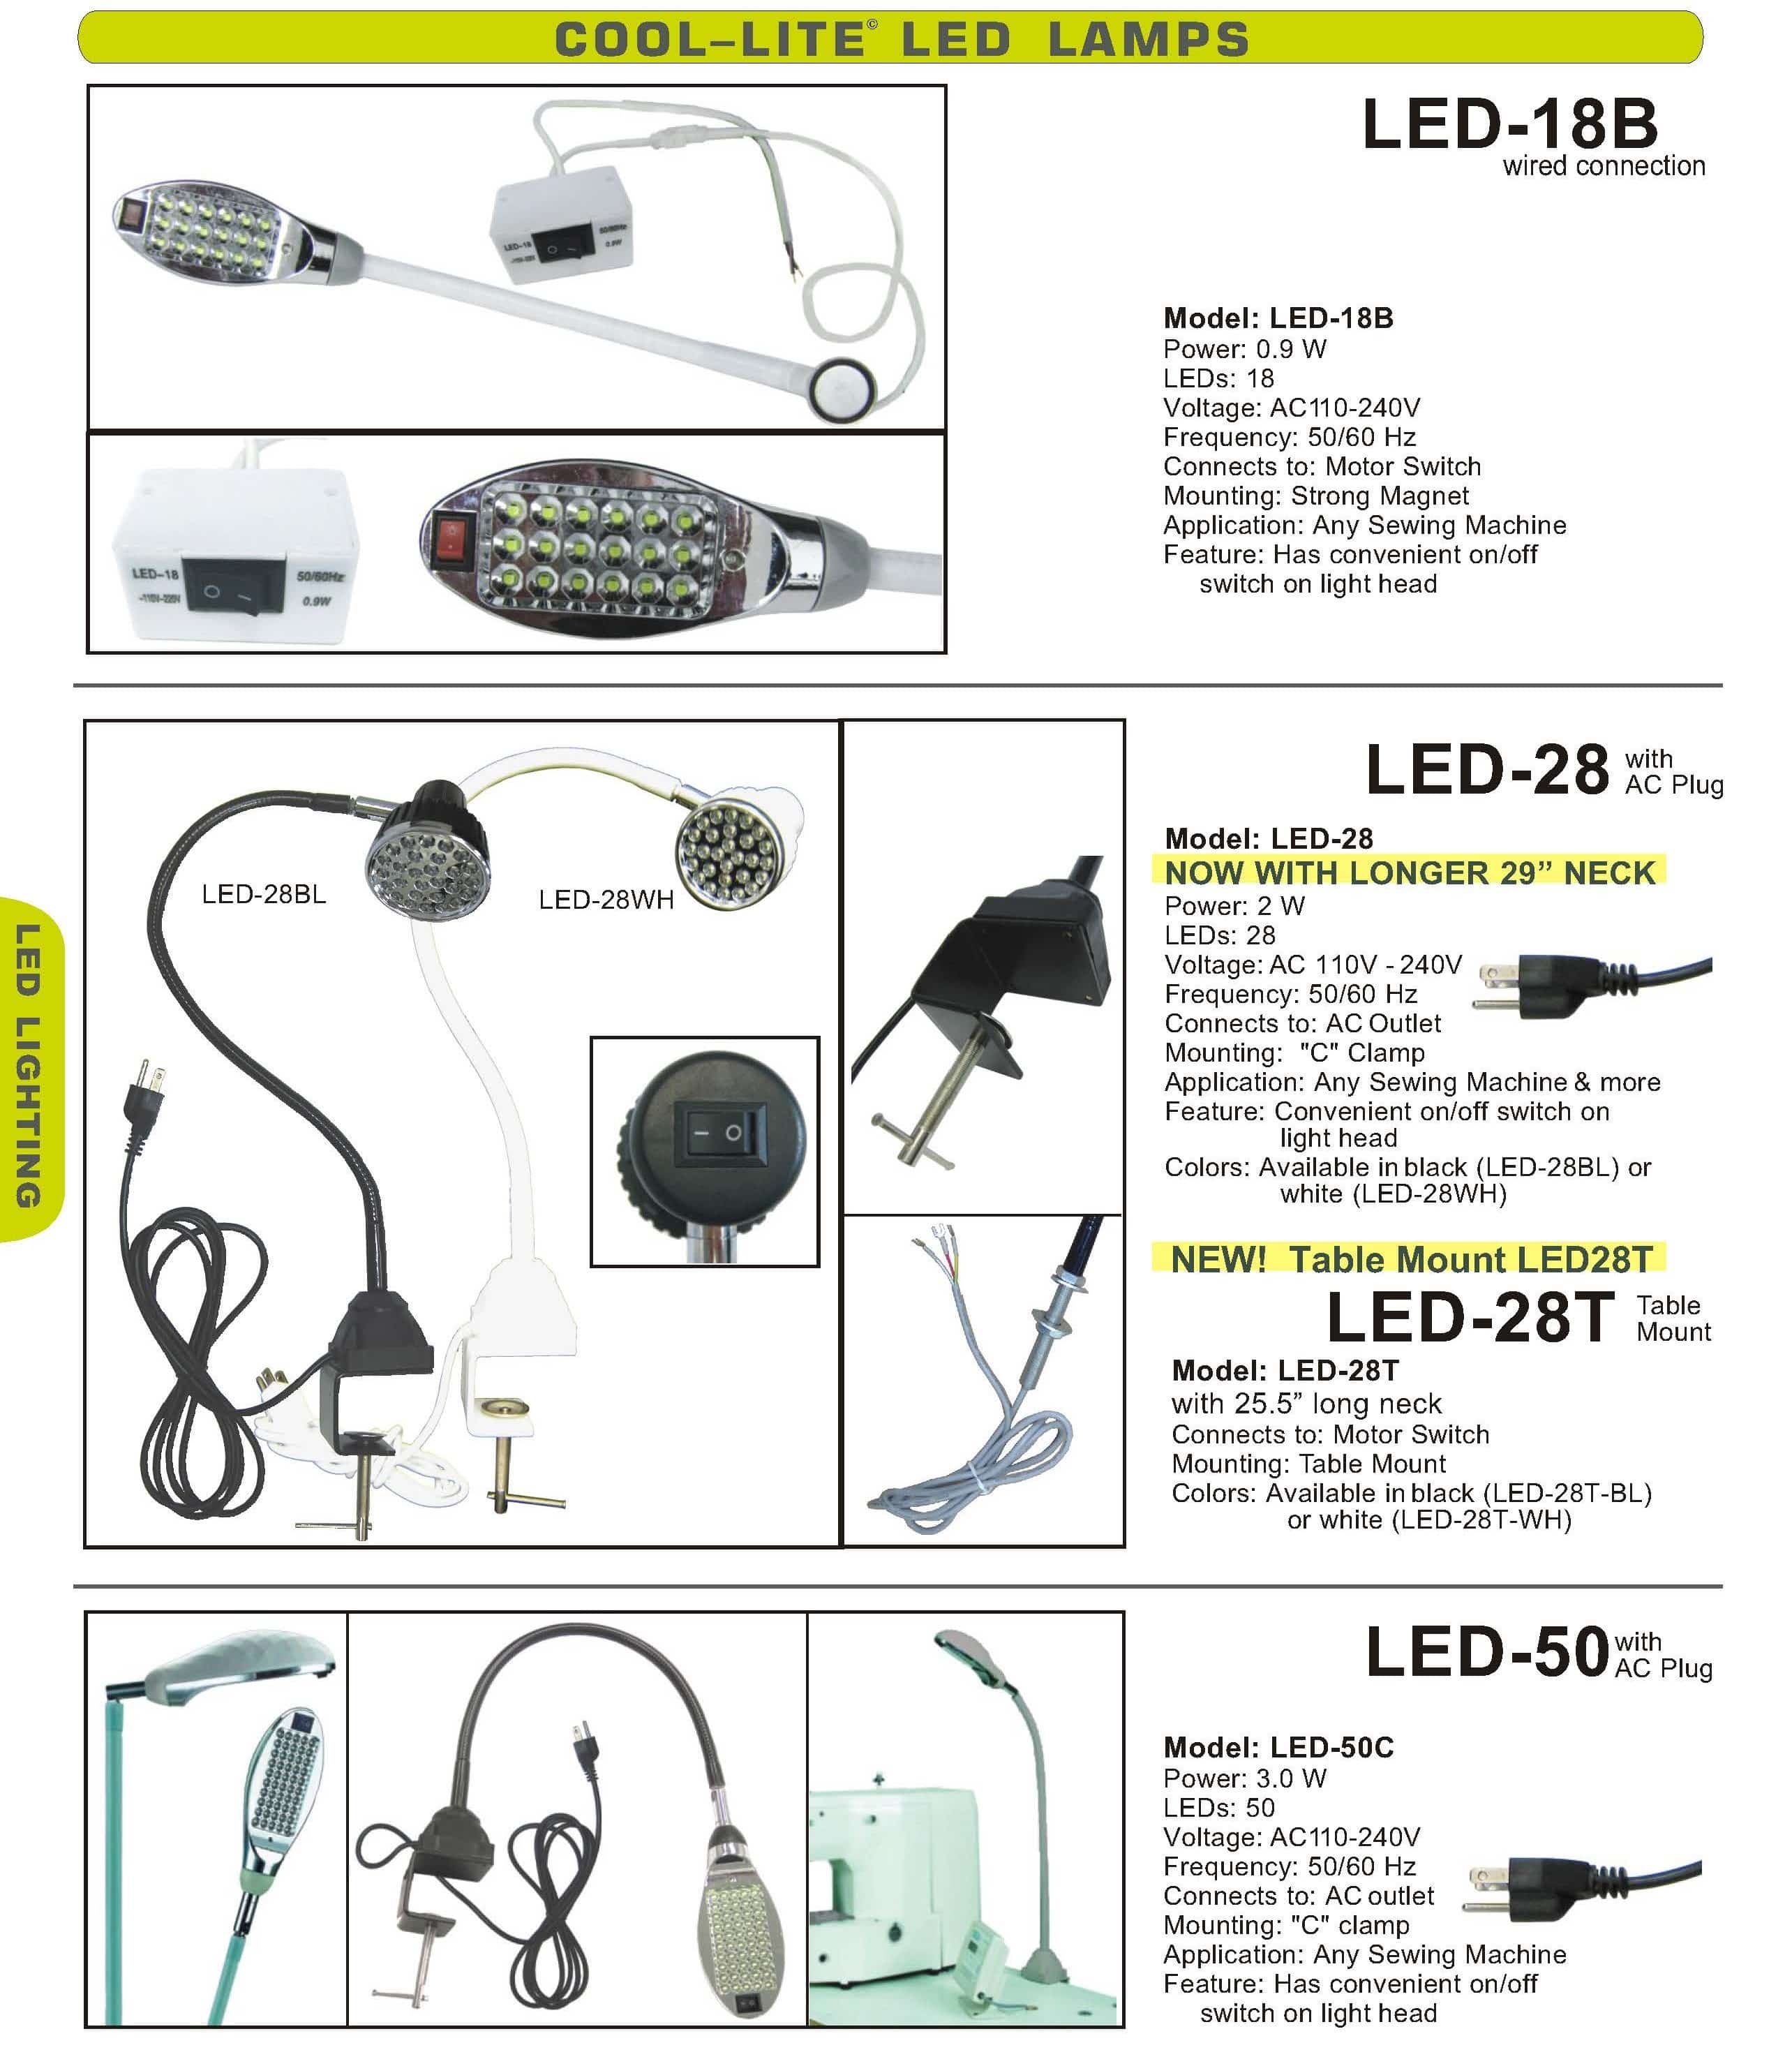 COOL-LITE LED LIGHTS and LAMPS: LED-18B, LED-28, LED-28T, LED-50
110 VOLTS